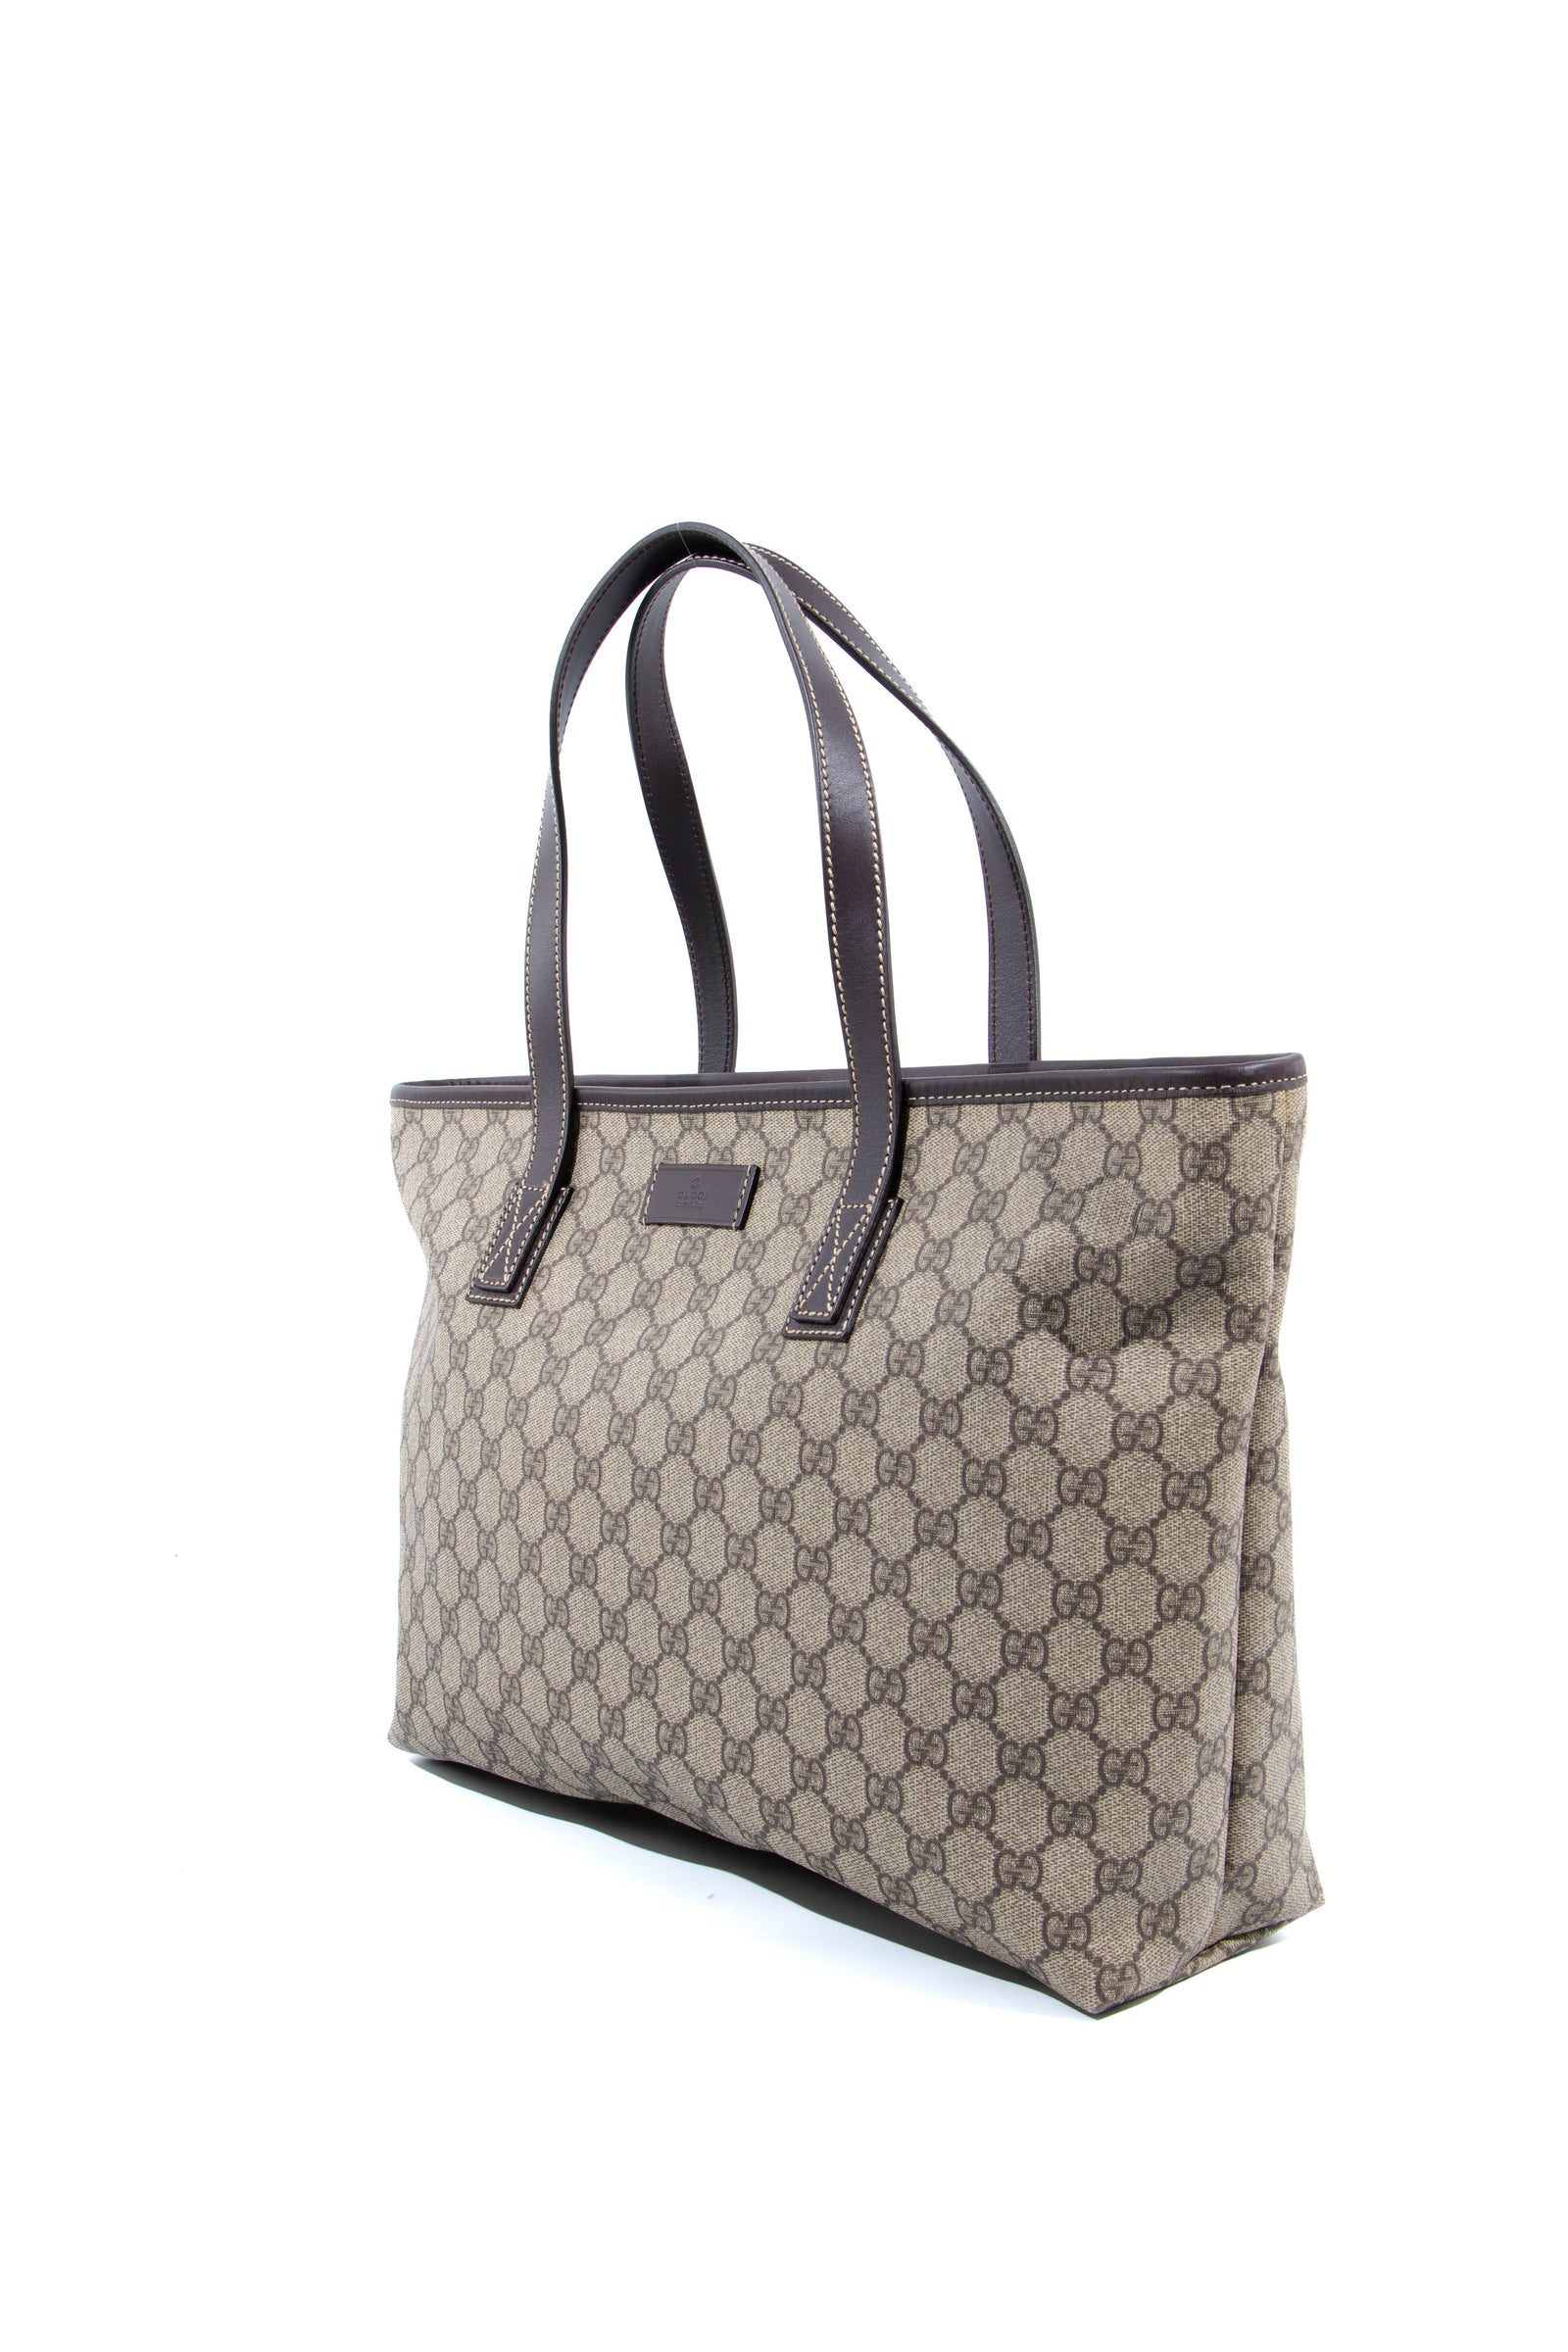 Gucci Diana mini python tote bag in Neutral Precious Skins